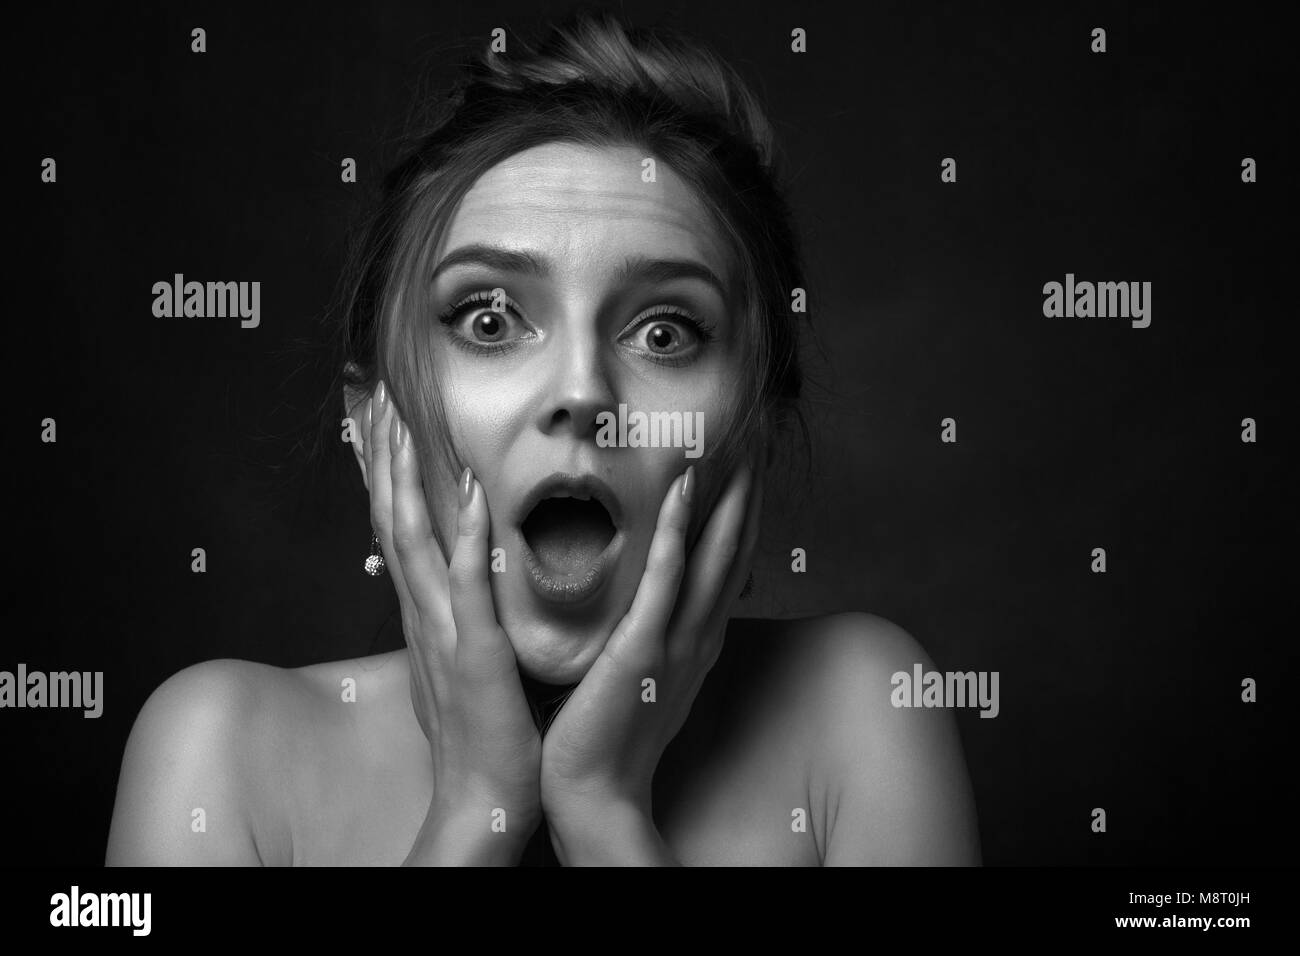 fun stressed scared girl in dark looking at camera screaming, monochrome Stock Photo